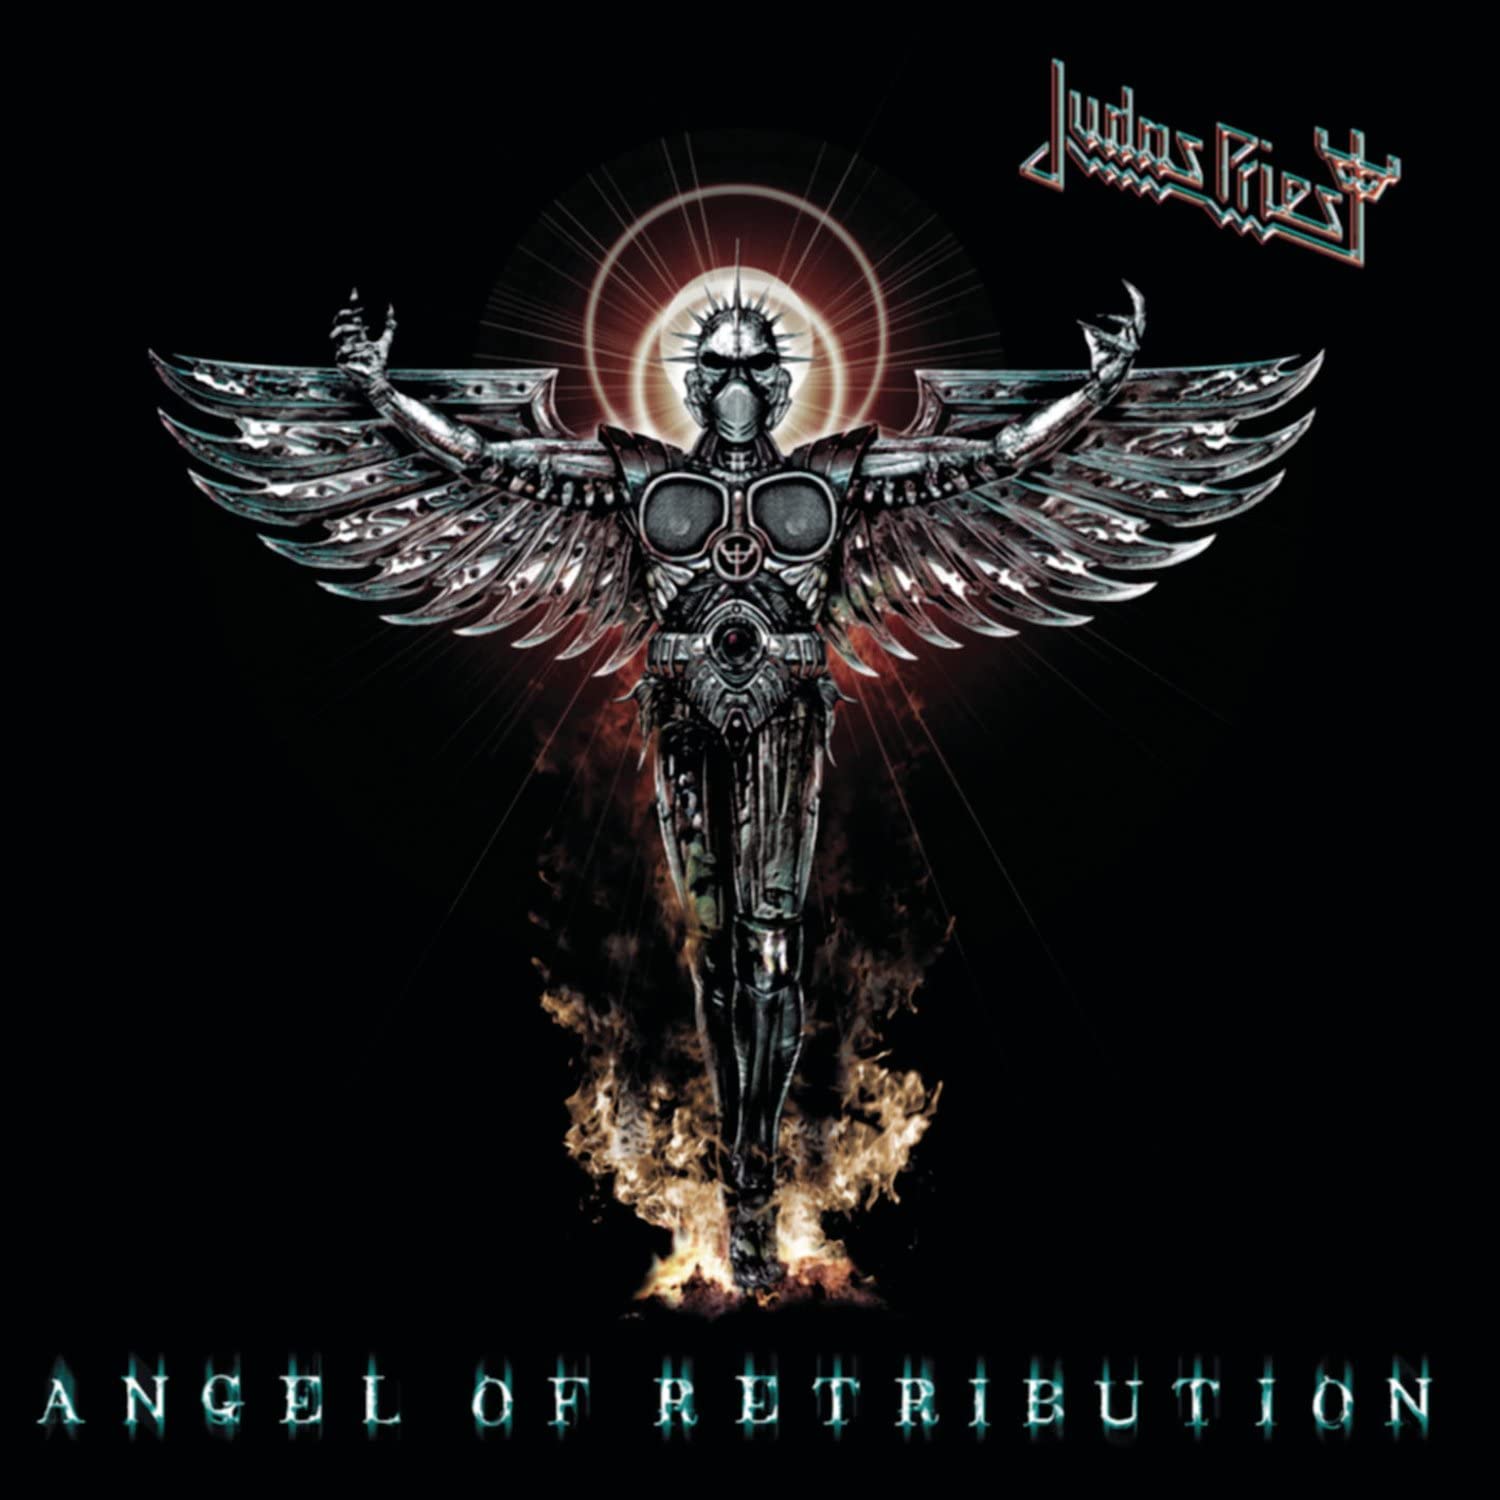 Judas Priest - Angel of Retribution (Vinyl 2LP)